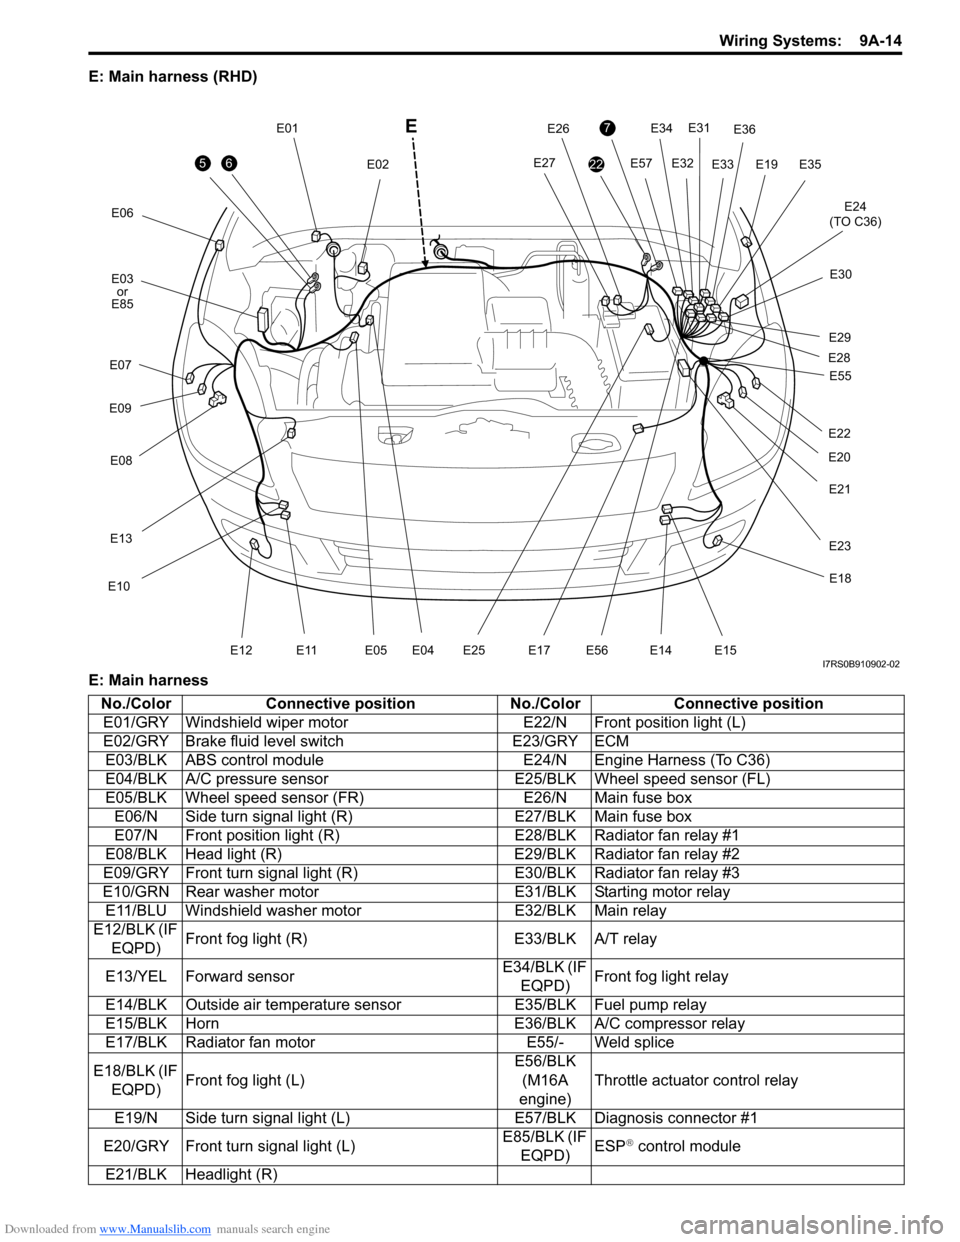 SUZUKI SWIFT 2006 2.G Service Workshop Manual Downloaded from www.Manualslib.com manuals search engine Wiring Systems:  9A-14
E: Main harness (RHD)
E: Main harness
56
E06E12
E03or
E85
E07
E09
E08
E13
E10
E11E05 E04
E01 E02
E19
7
22
E34E31
E32
E57